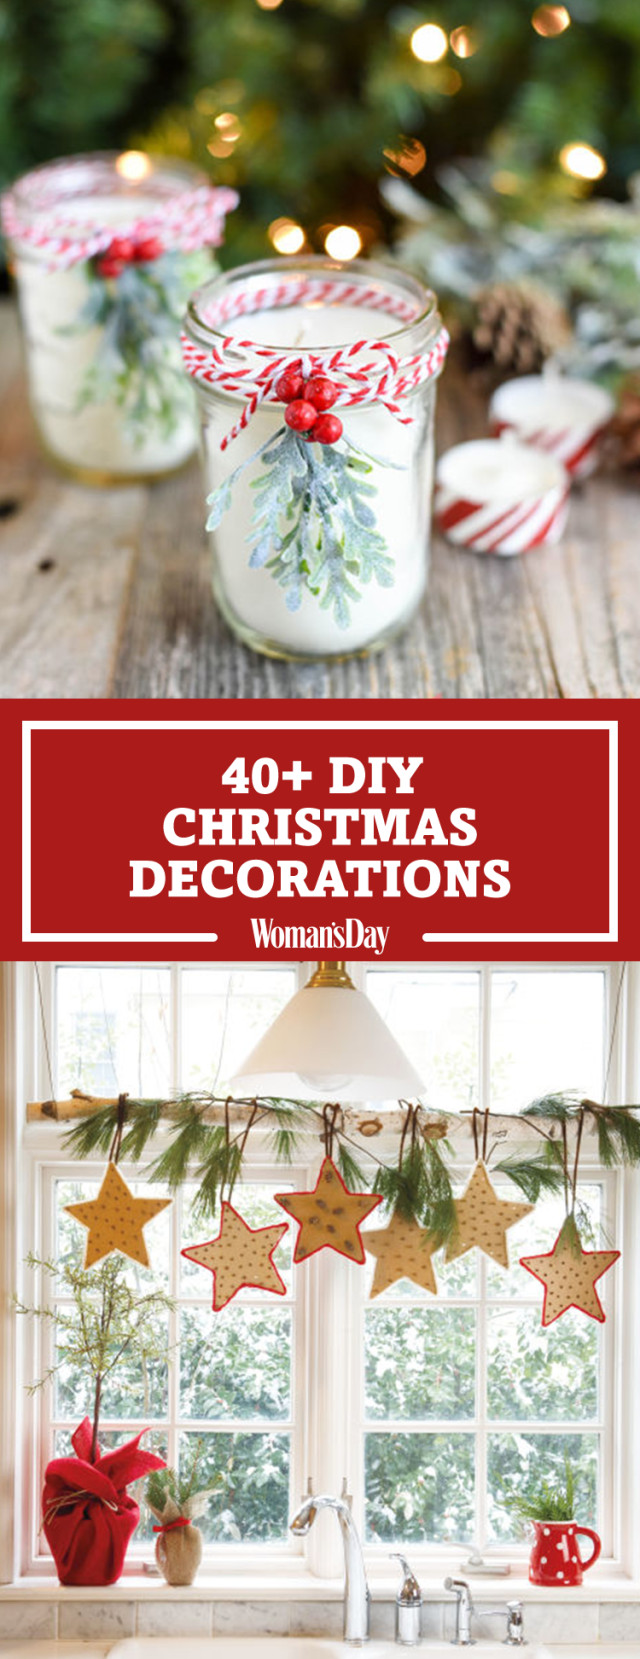 DIY For Christmas Decors
 47 Easy DIY Christmas Decorations Homemade Ideas for